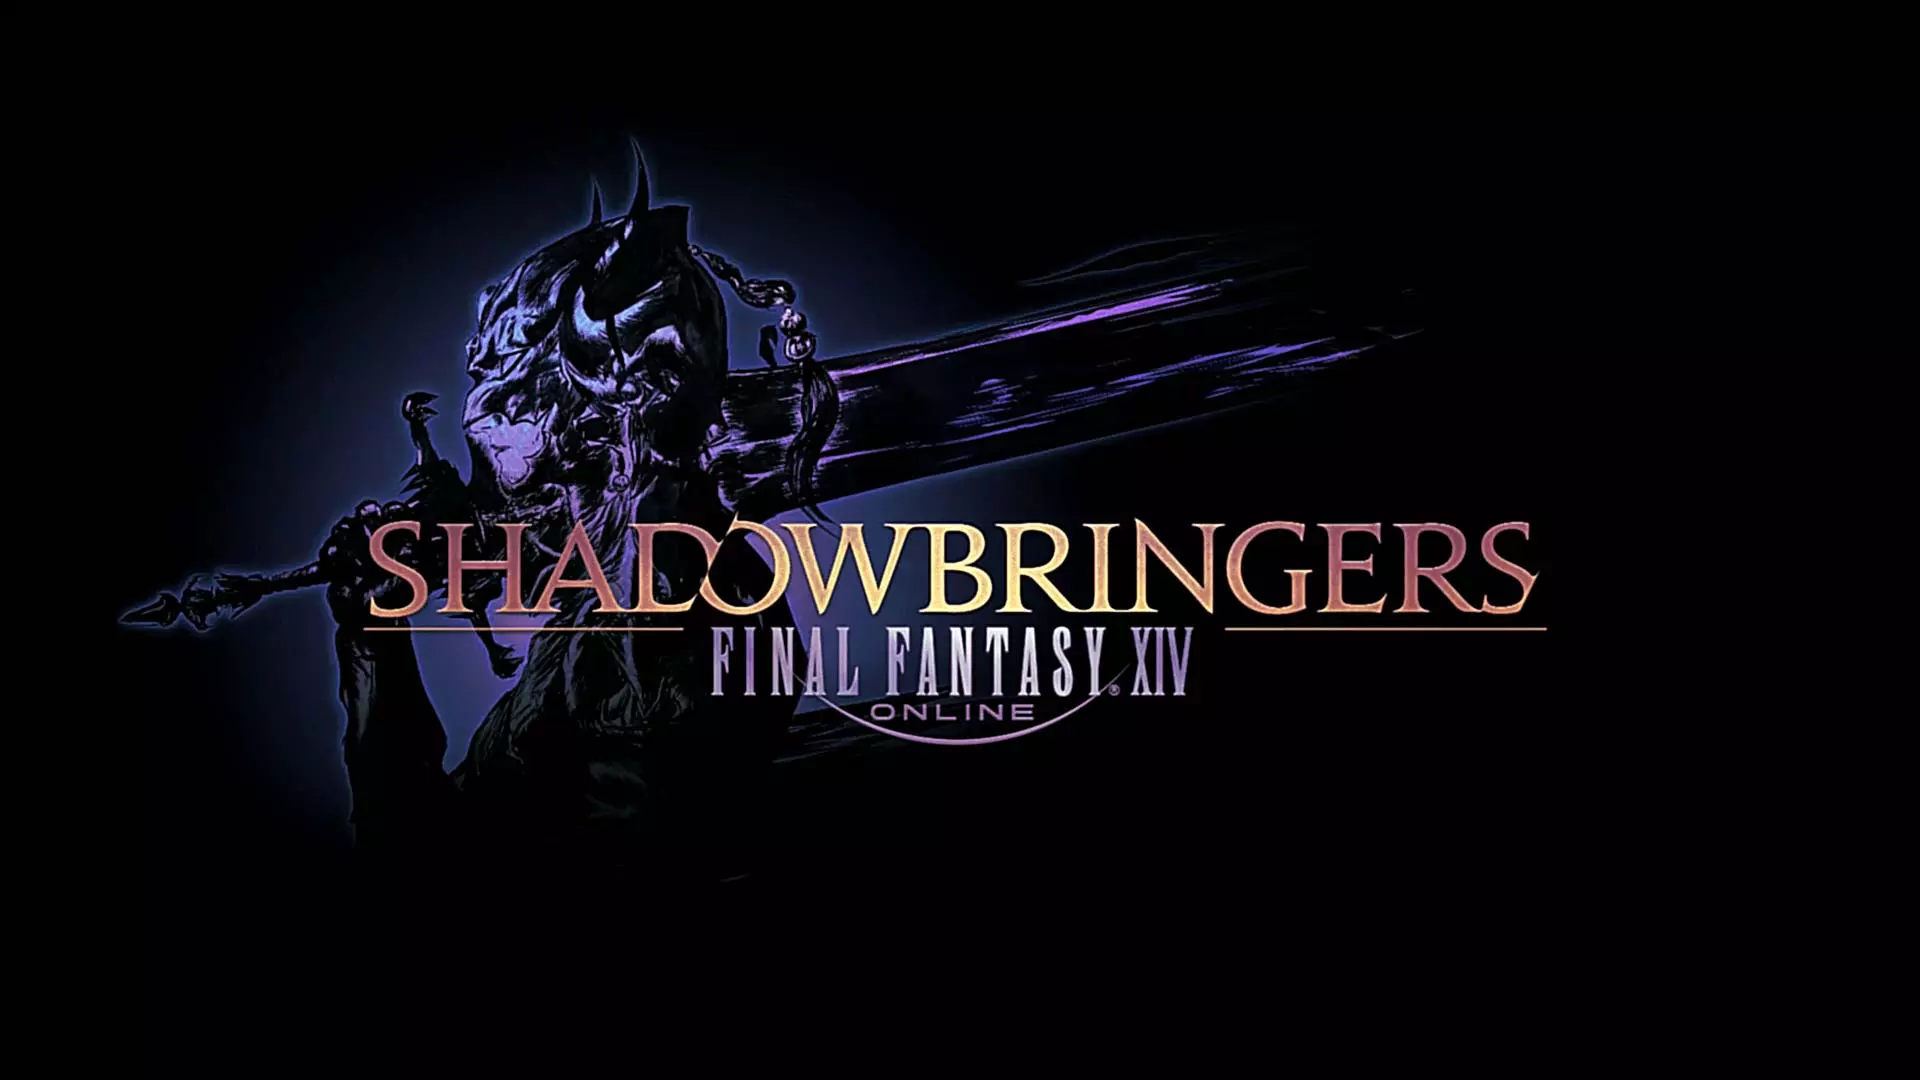 لوگوي بازي Final Fantasy XIV: Shadowbringers